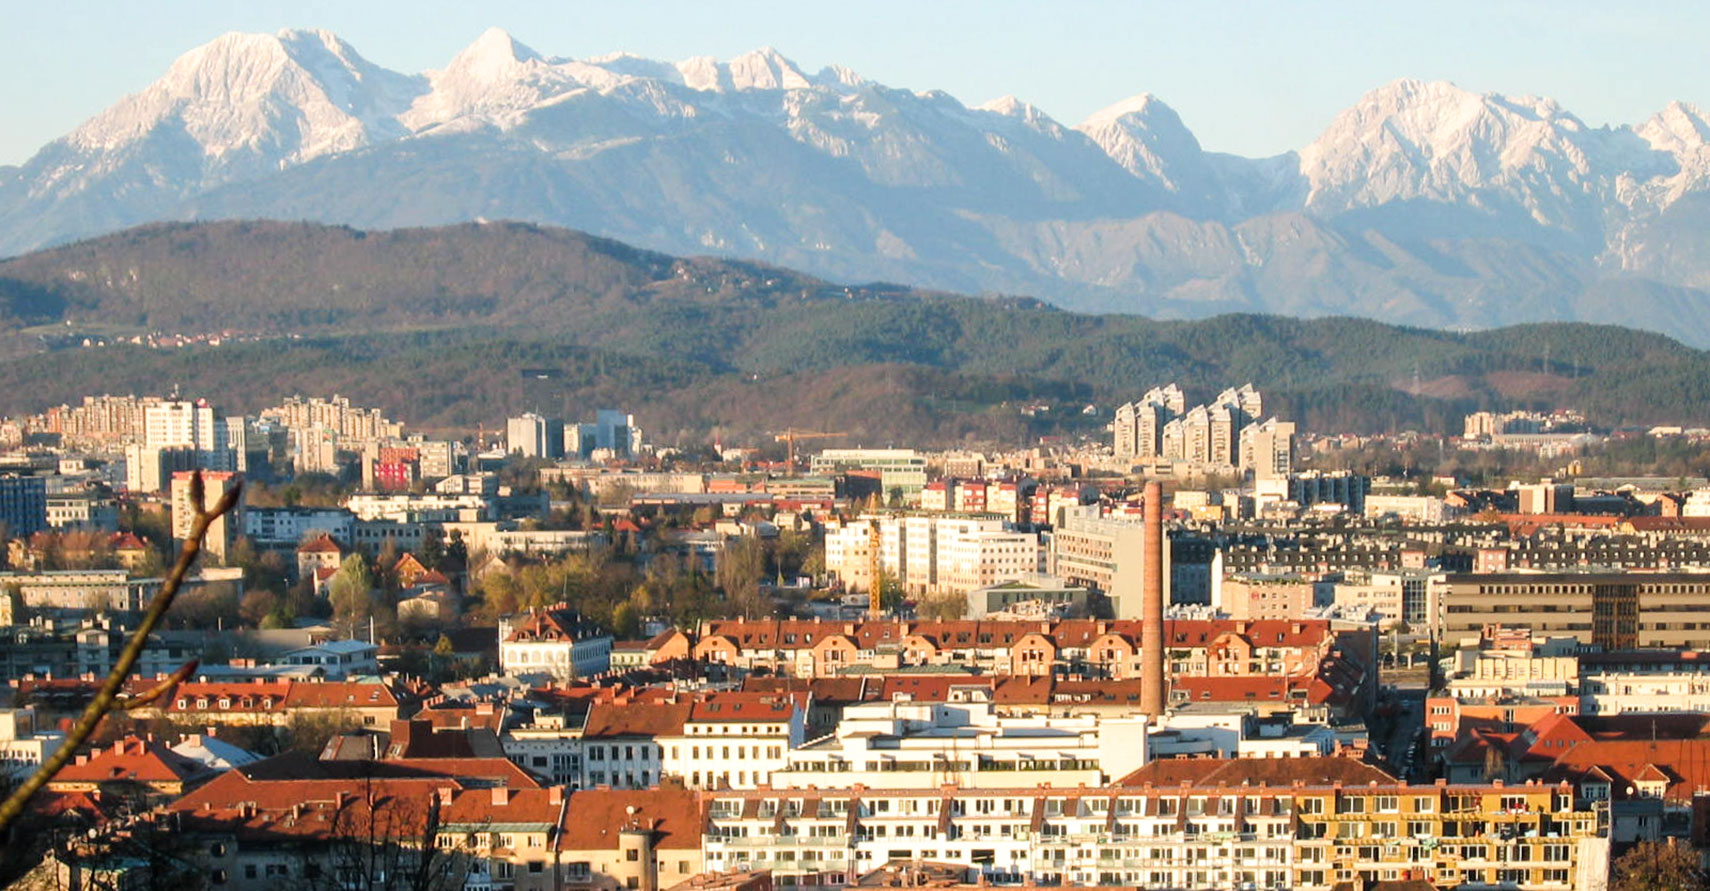 Ljubljana, Slovenia with Alps